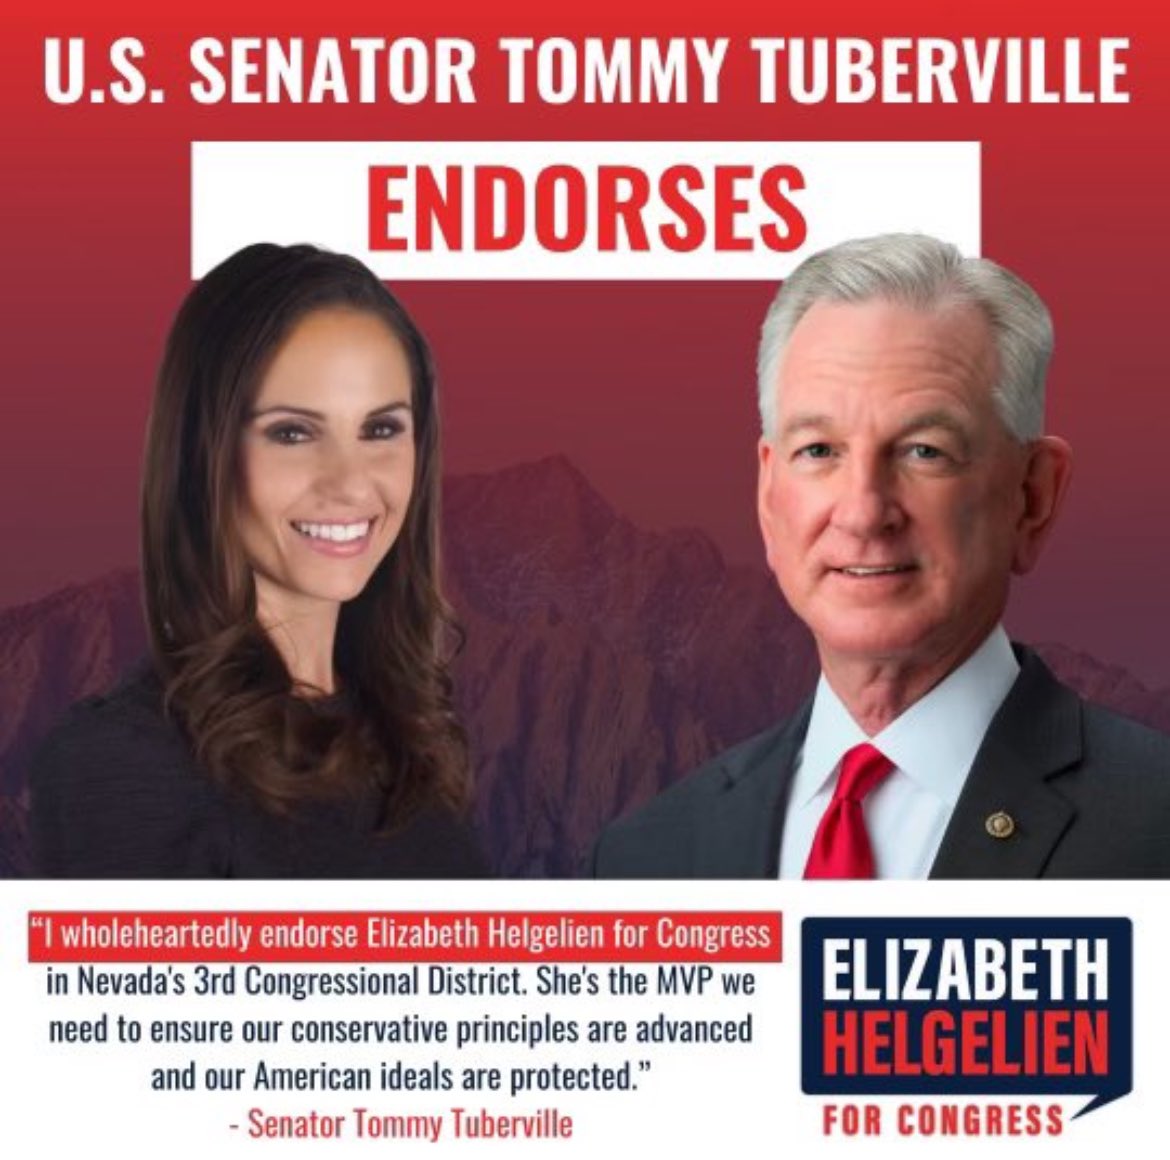 I’m honored to be endorsed by U.S. Senator Tommy Tuberville! Thank you for your leadership Senator! Vote Elizabeth Helgelien for Congress on June 11! Early voting starts May 25th • Nevada ElizabethForNevada.com @TTuberville @realDonaldTrump #nv03 #Tuberville #Nevada…